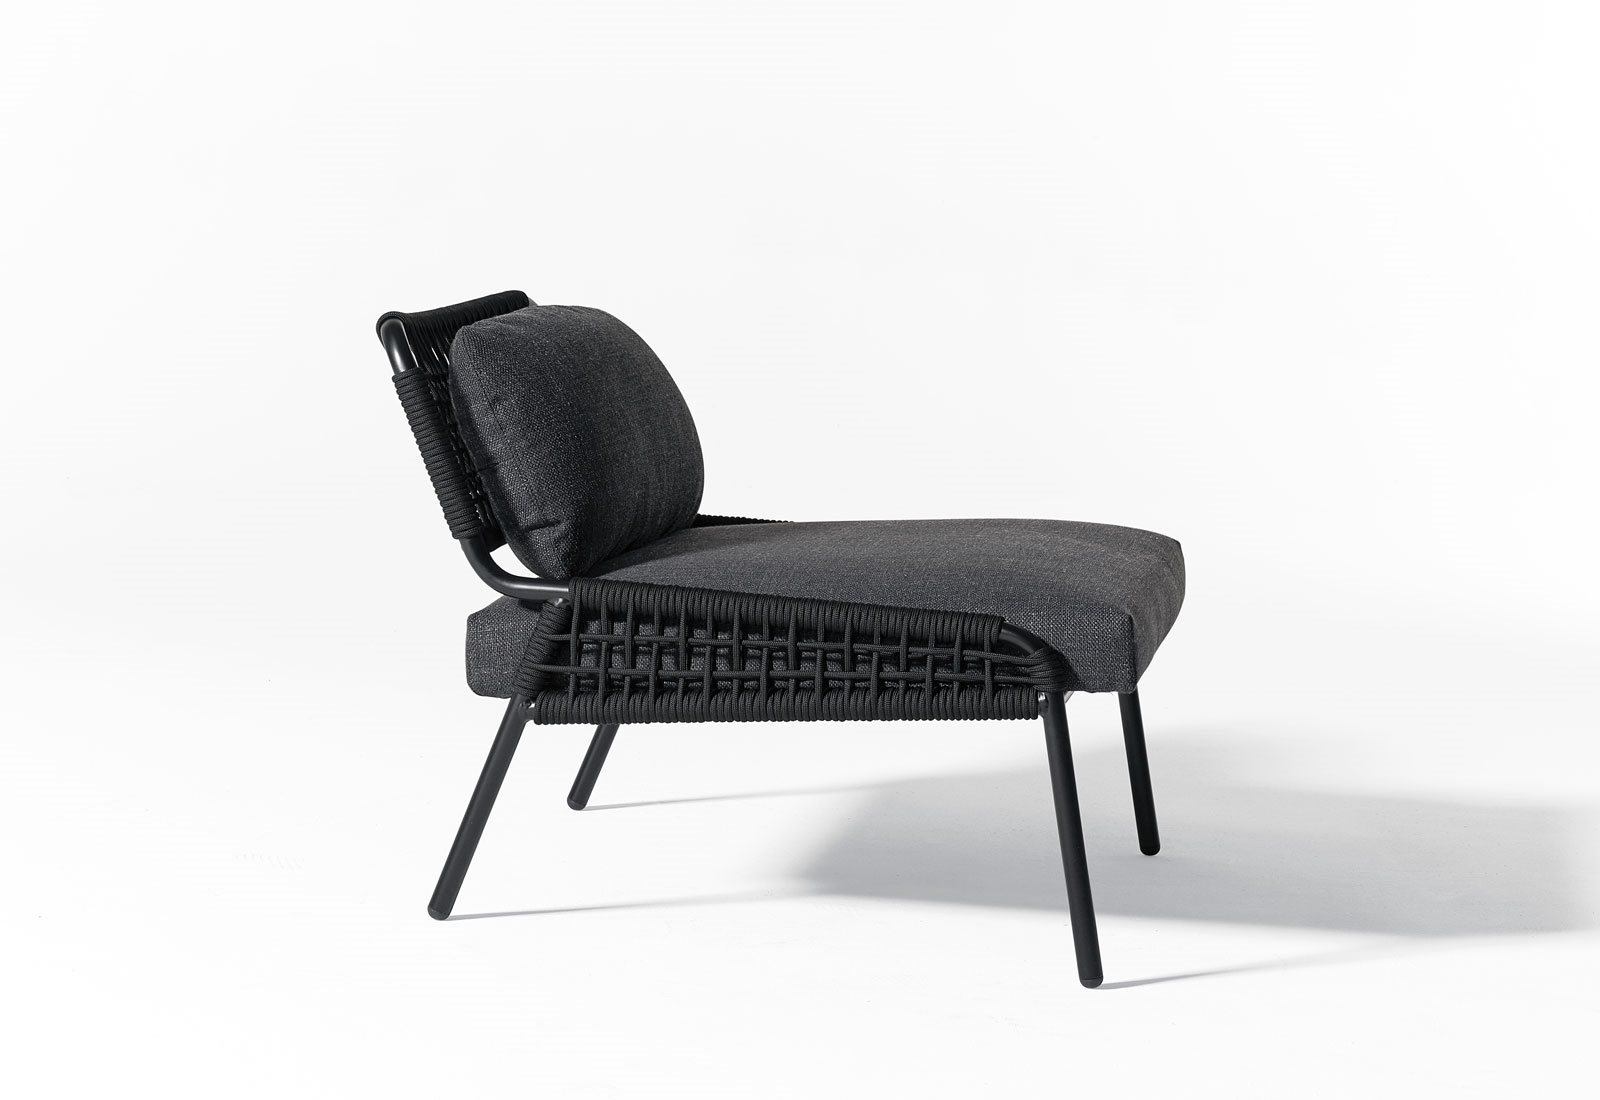 Zoe-open-air-armchair-03-1600x1100